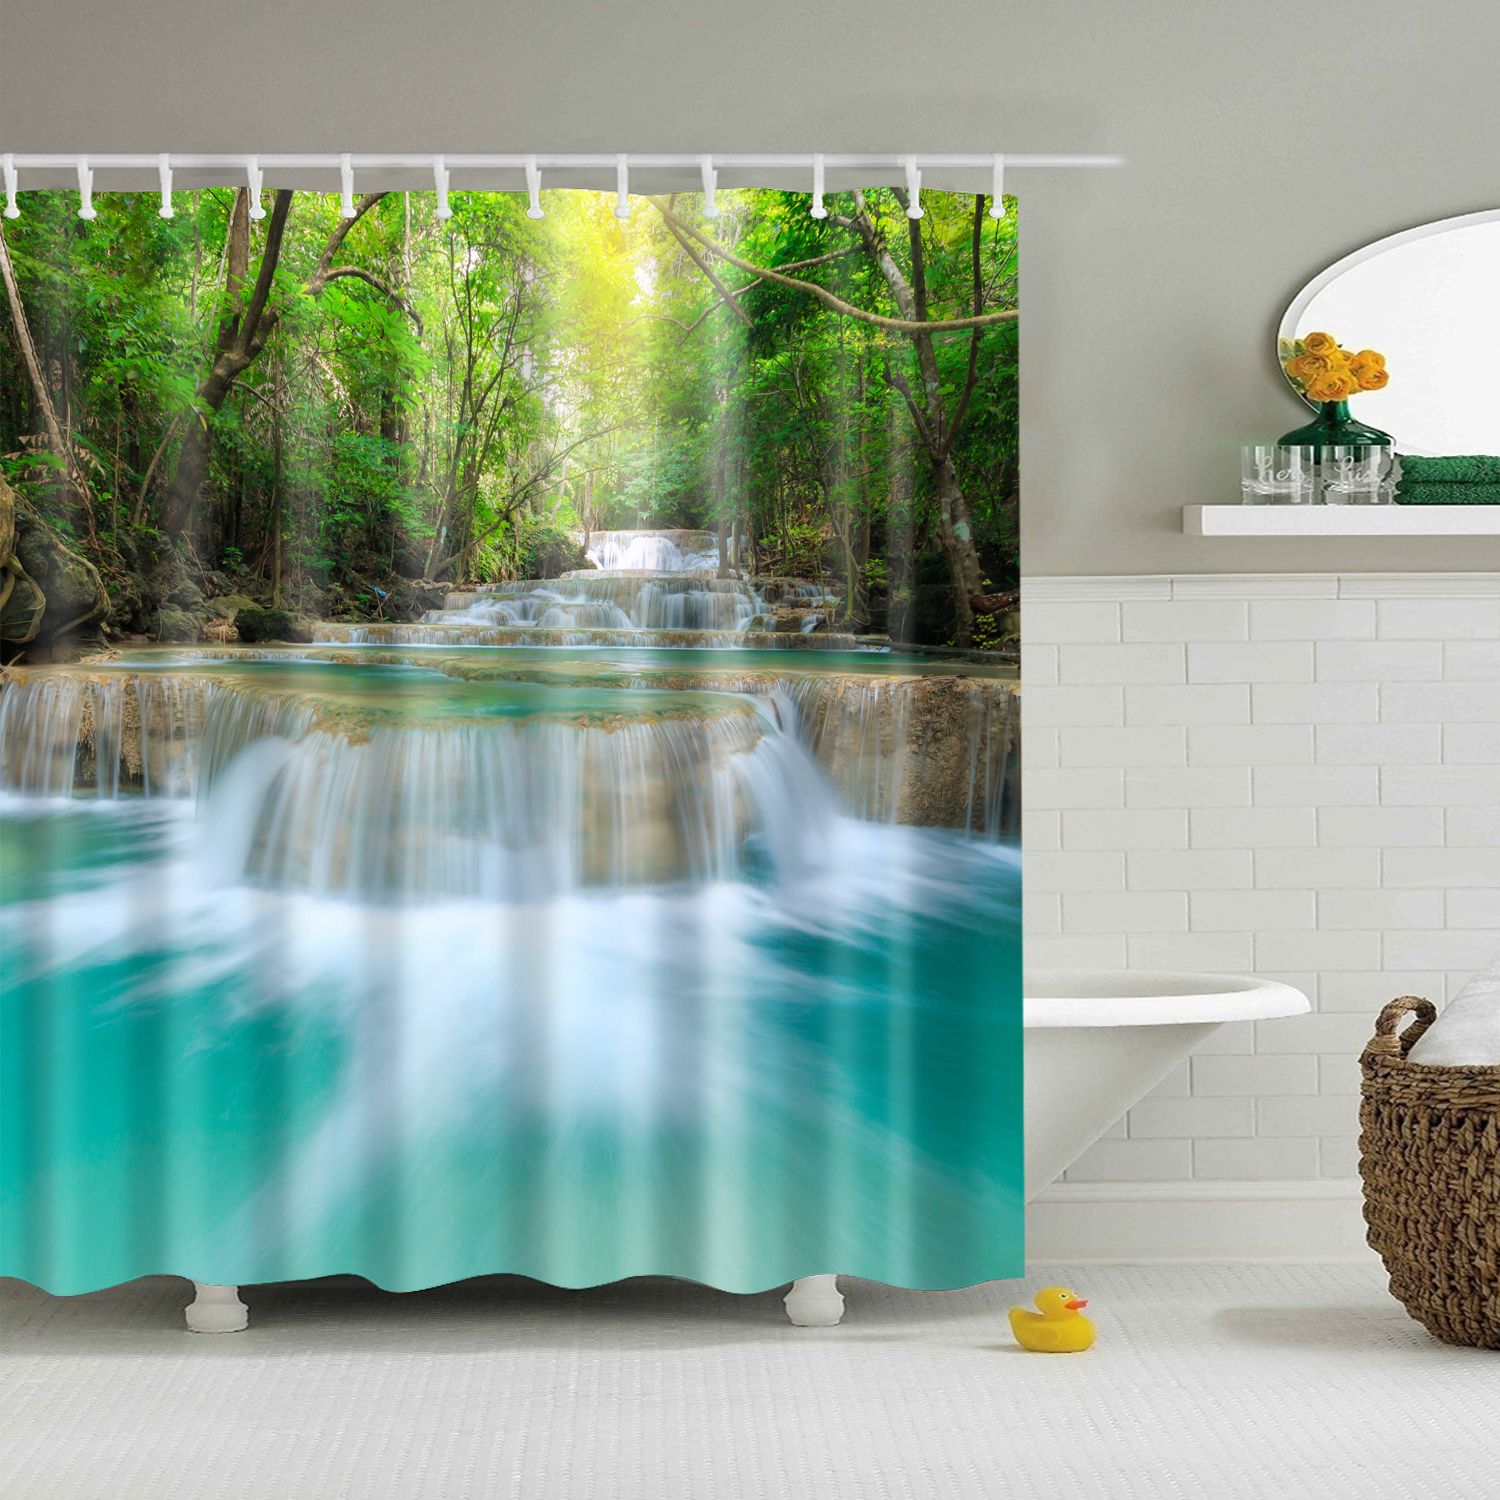 3D Fabric Bathroom Shower Curtain Waterfall Nature Scenery Waterproof 12 Hooks